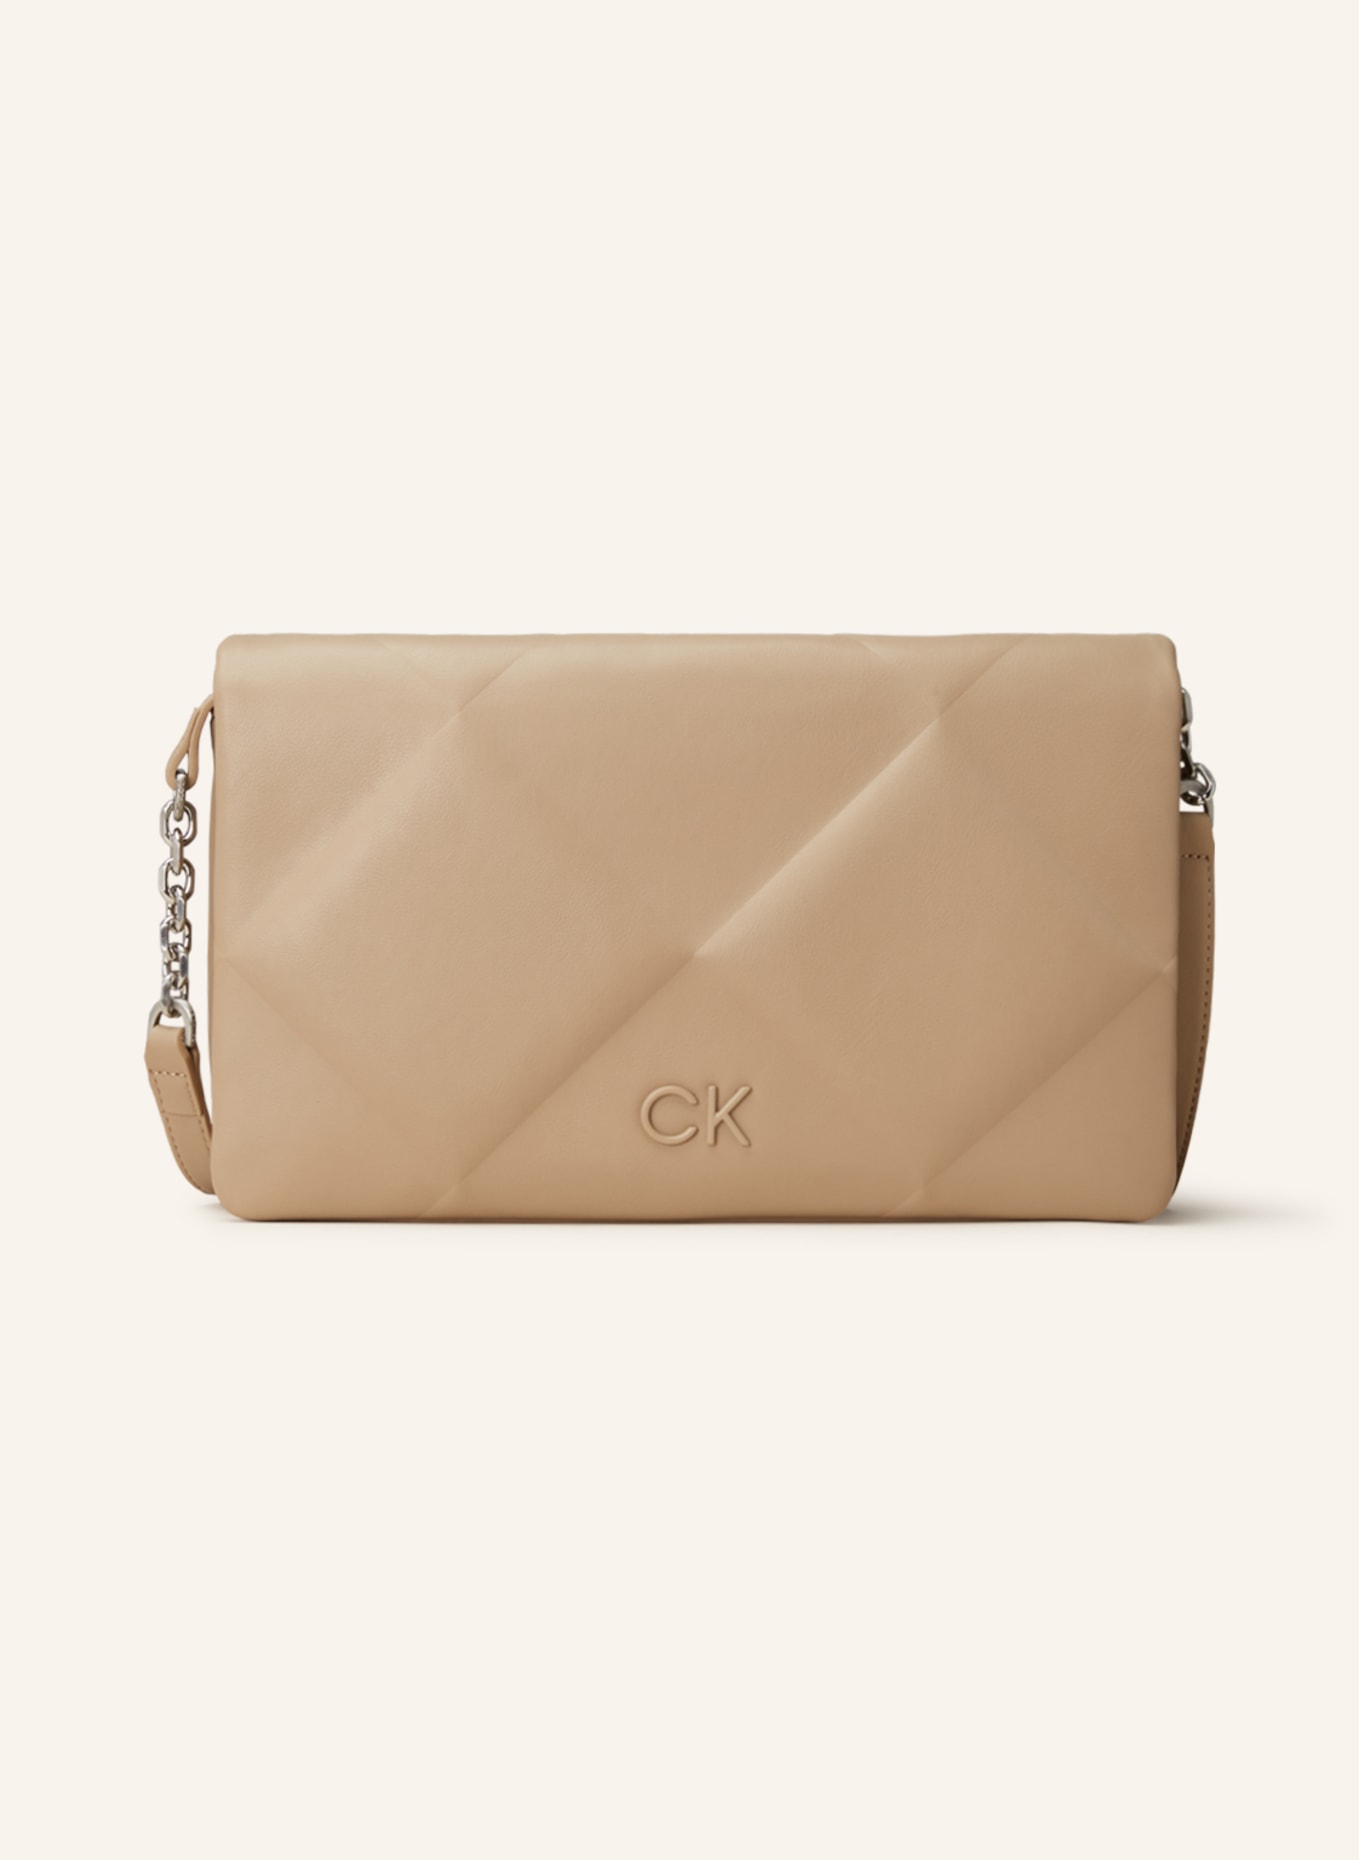 Calvin Klein Crossbody Bag in Light Beige